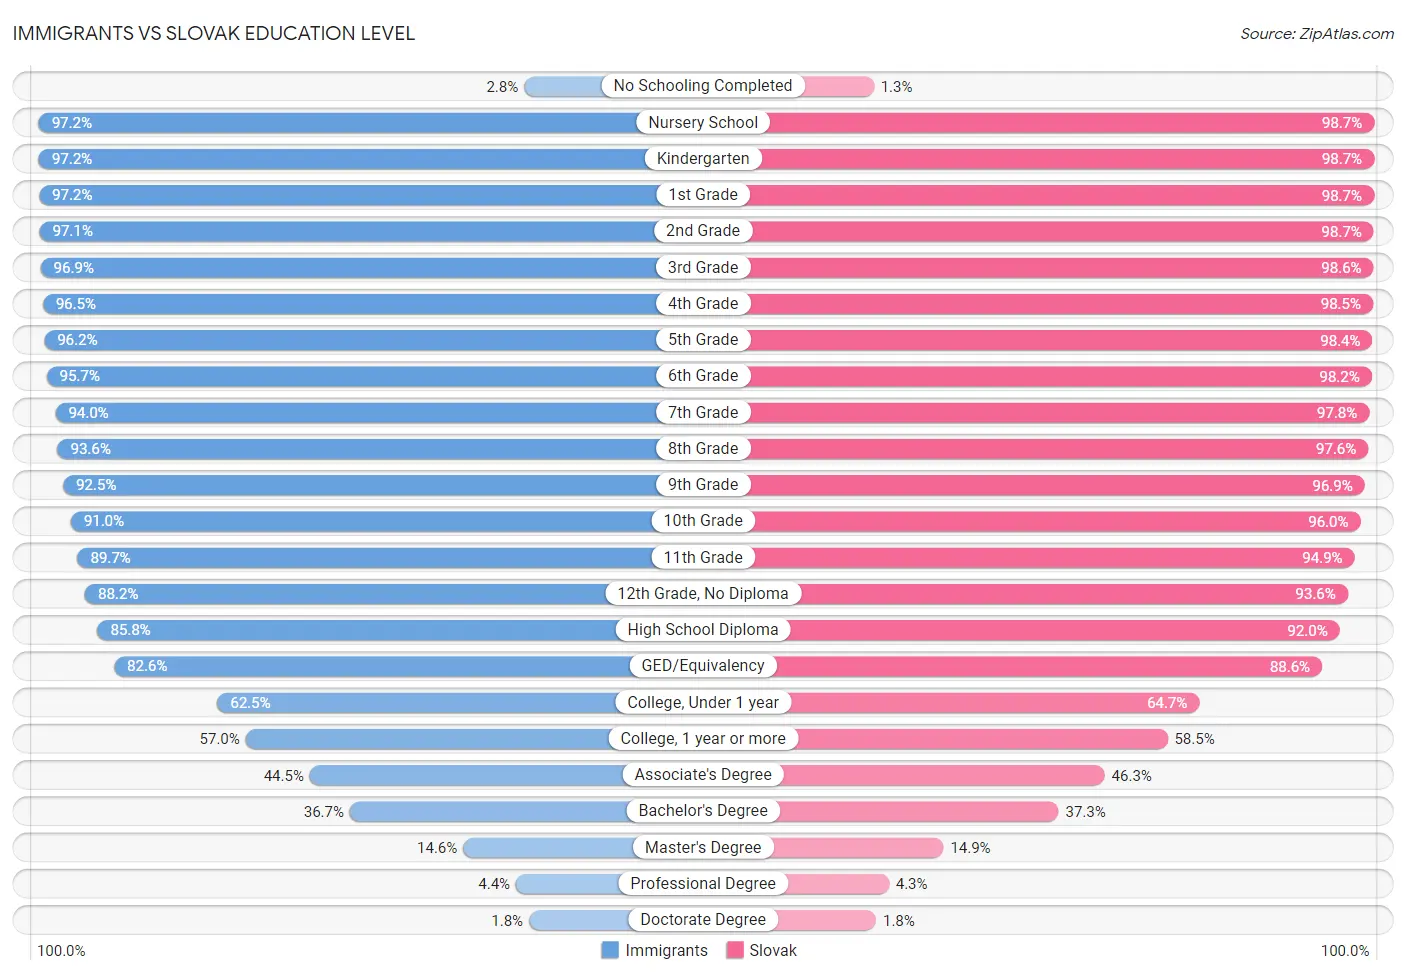 Immigrants vs Slovak Education Level